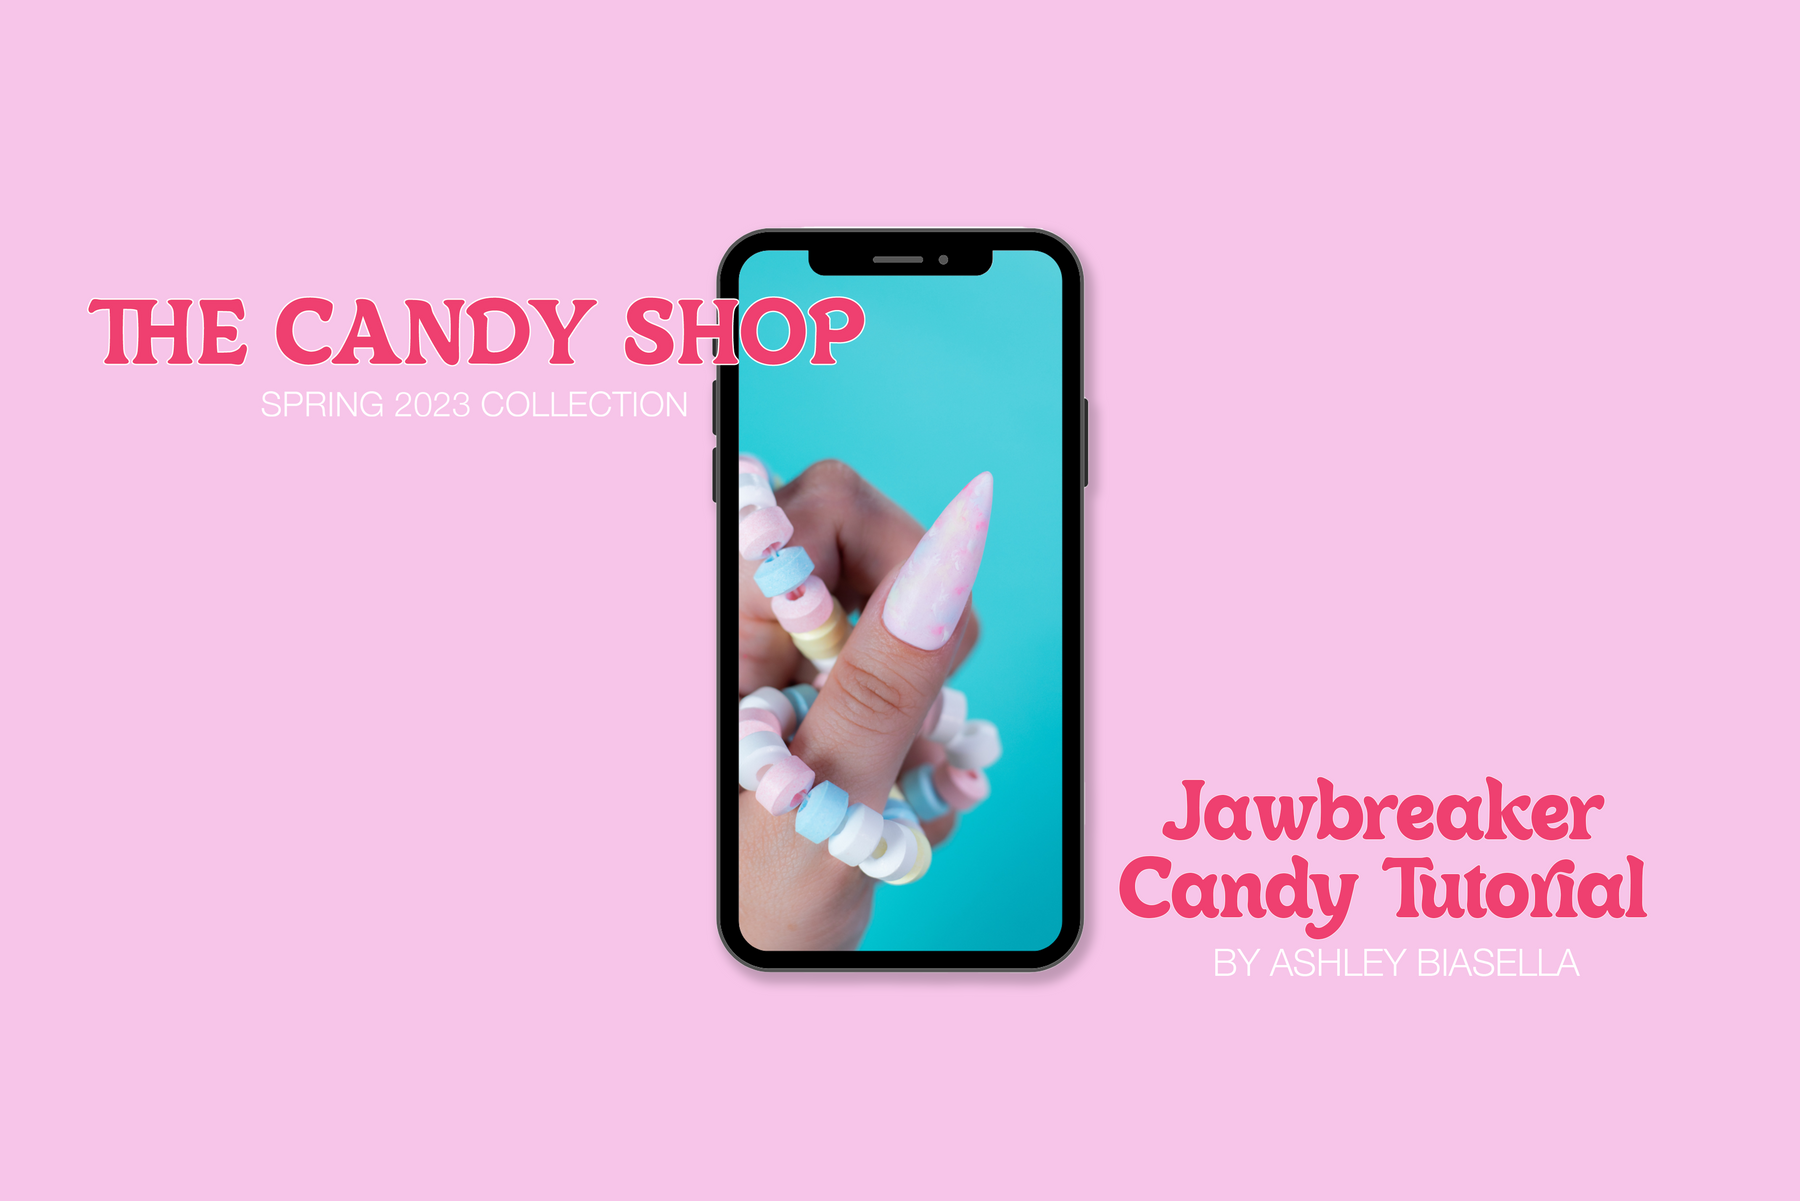 Jawbreaker Candy Nail Art Tutorial by LE Educator, Ashley Biasella